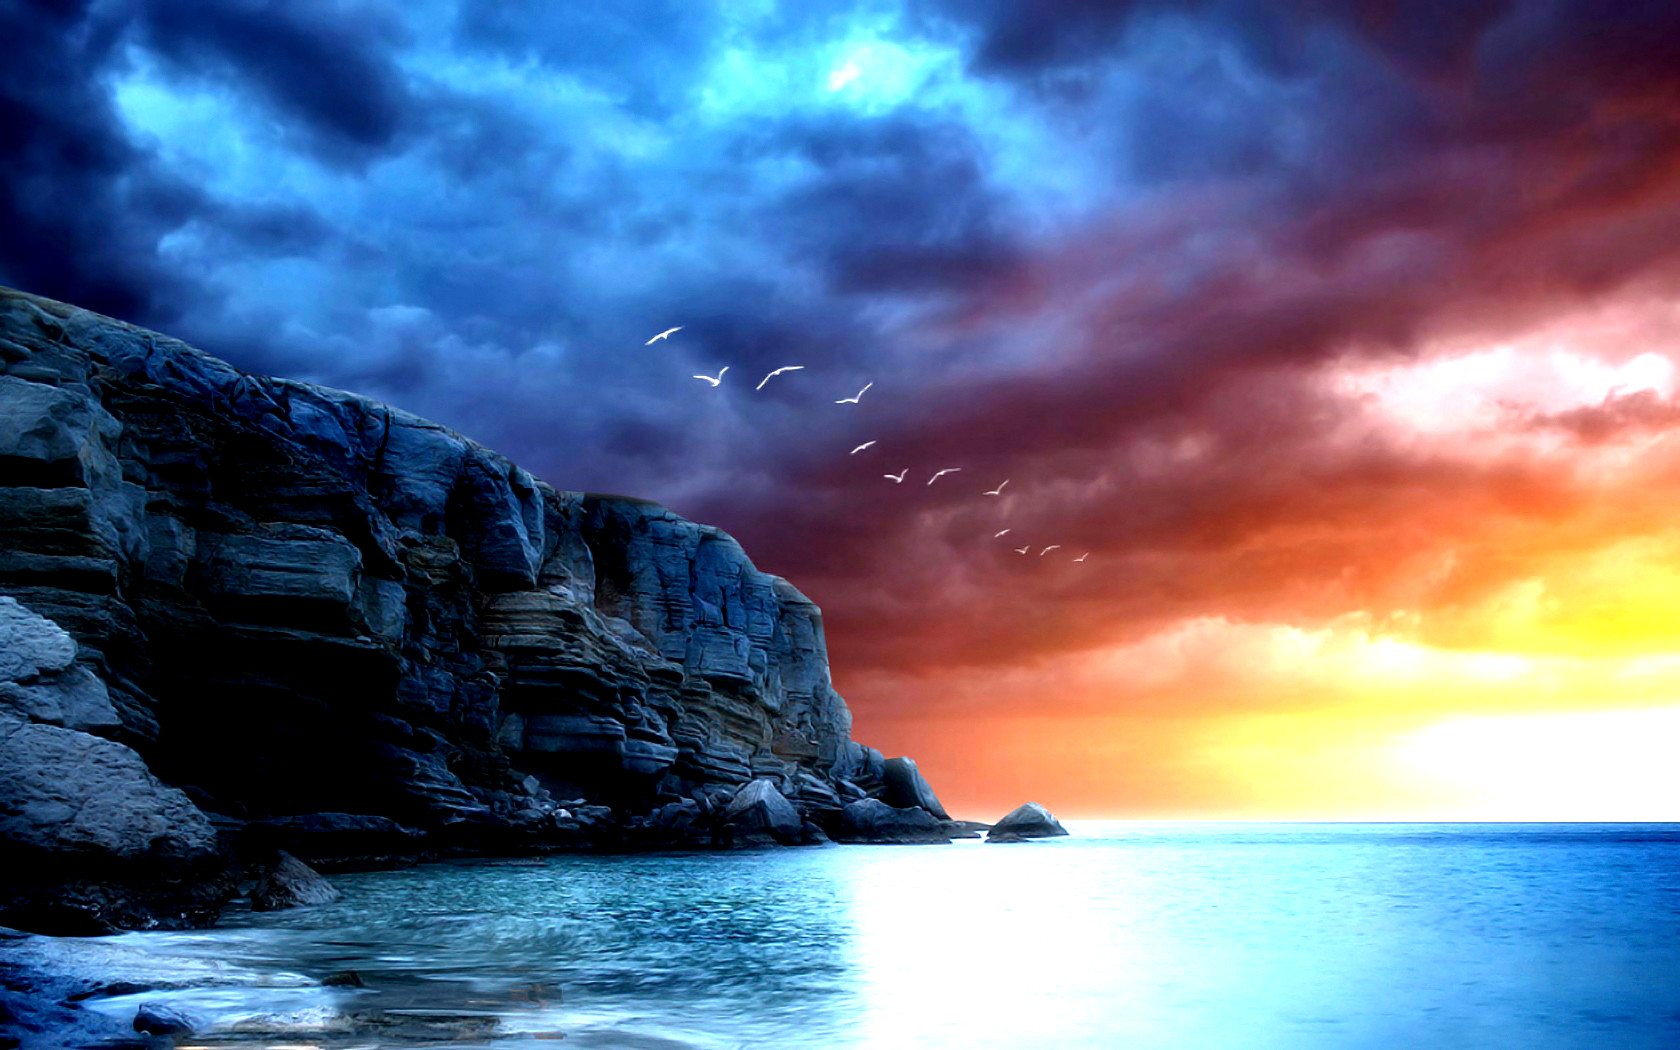 Amazing Desktop Images Desktop Wallpapers Beautiful Stormy Sky Calm Sea 1680x1050 Wallpaper Teahub Io